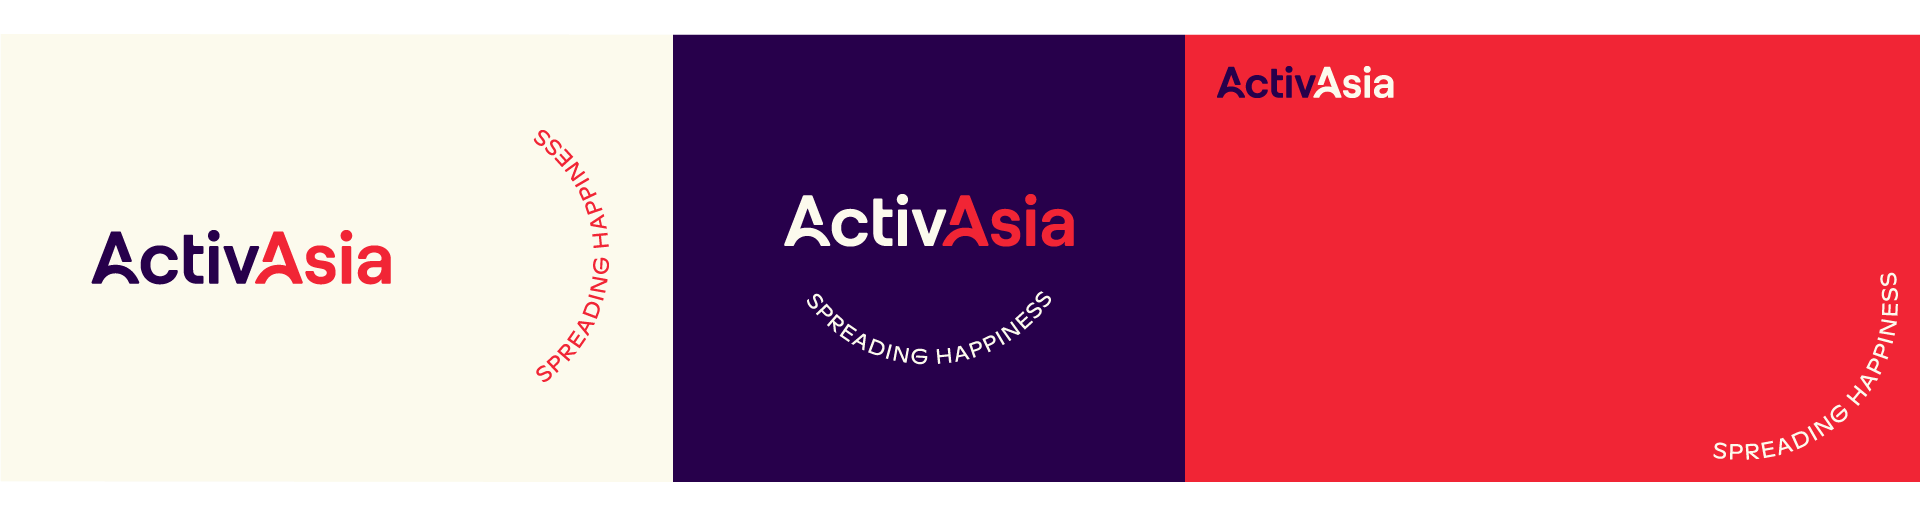 ActivAsia---Logo-Juxtaposition---2.png